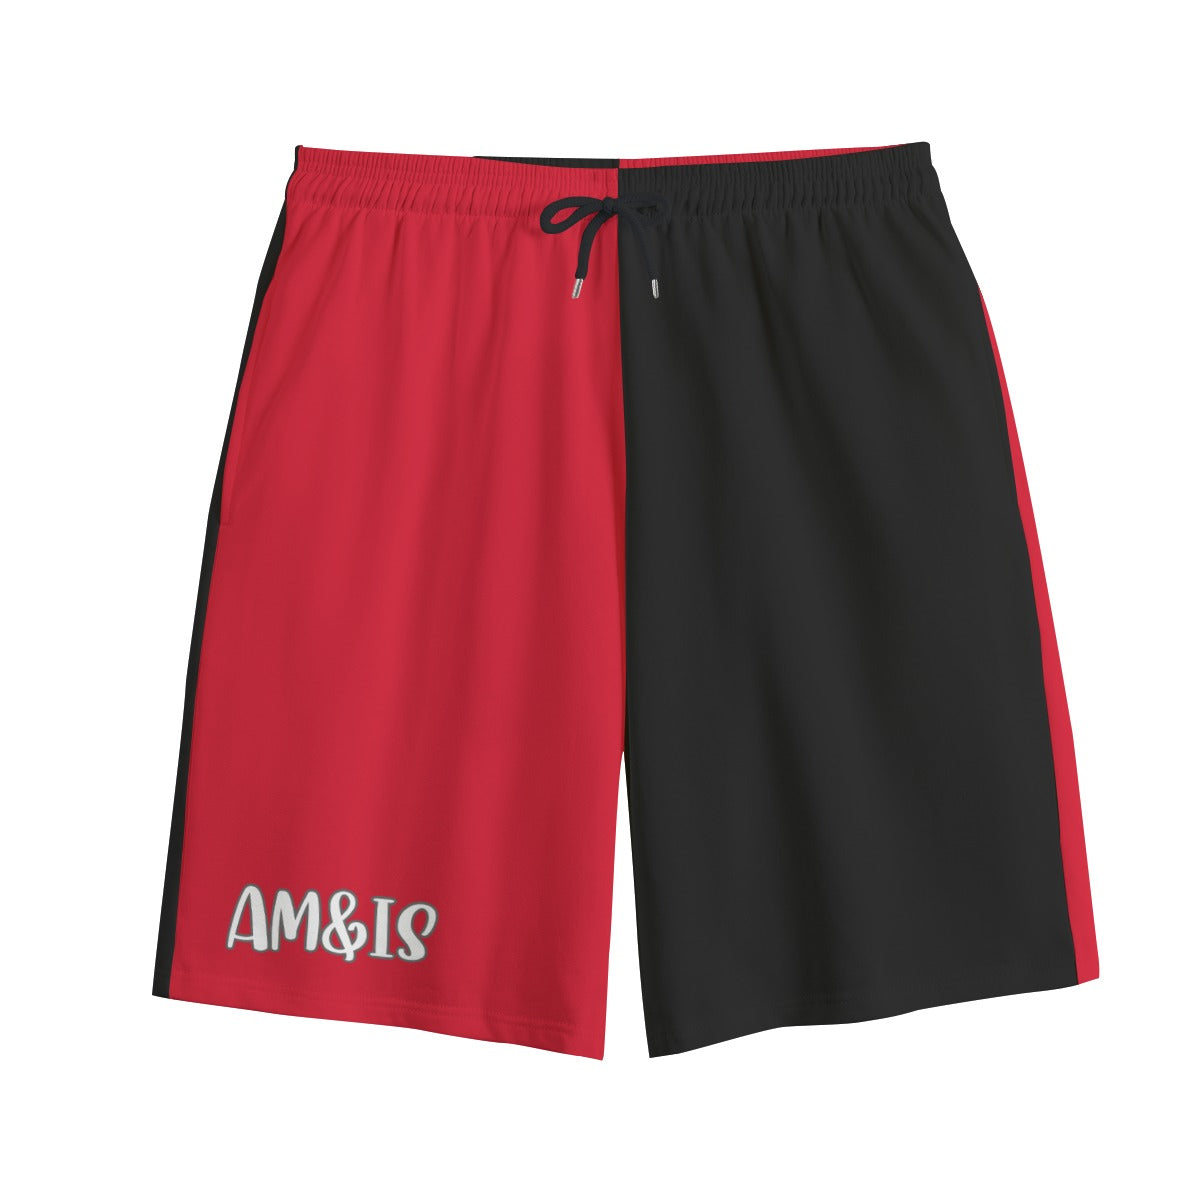 AM&IS Red Color Block Men's Shorts | 100% Cotton